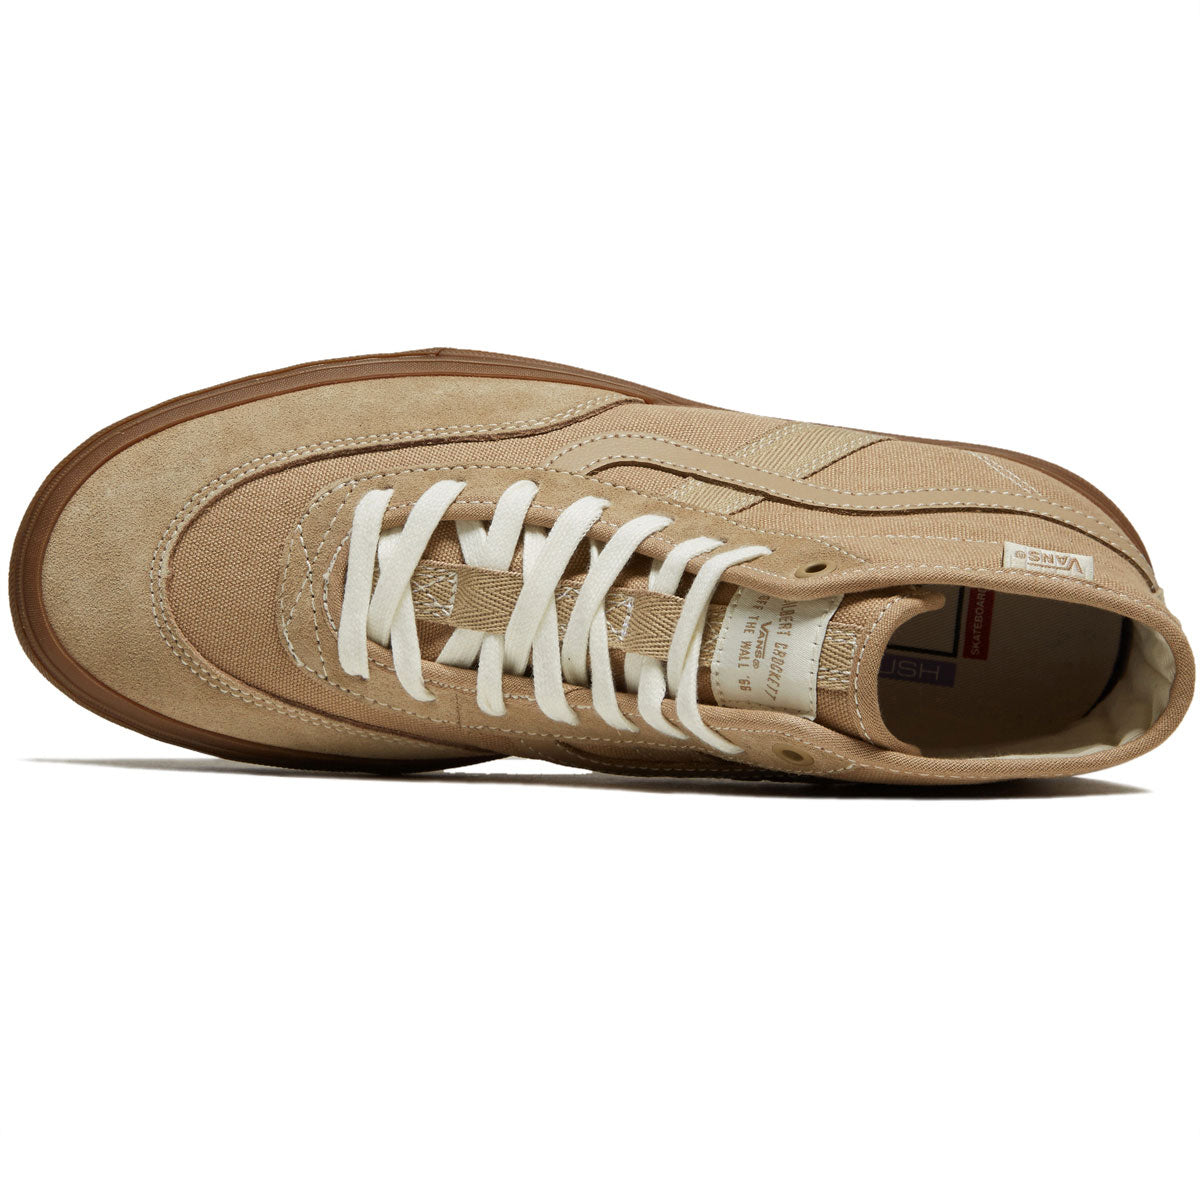 Vans Crockett High Shoes - Khaki/Gum image 3